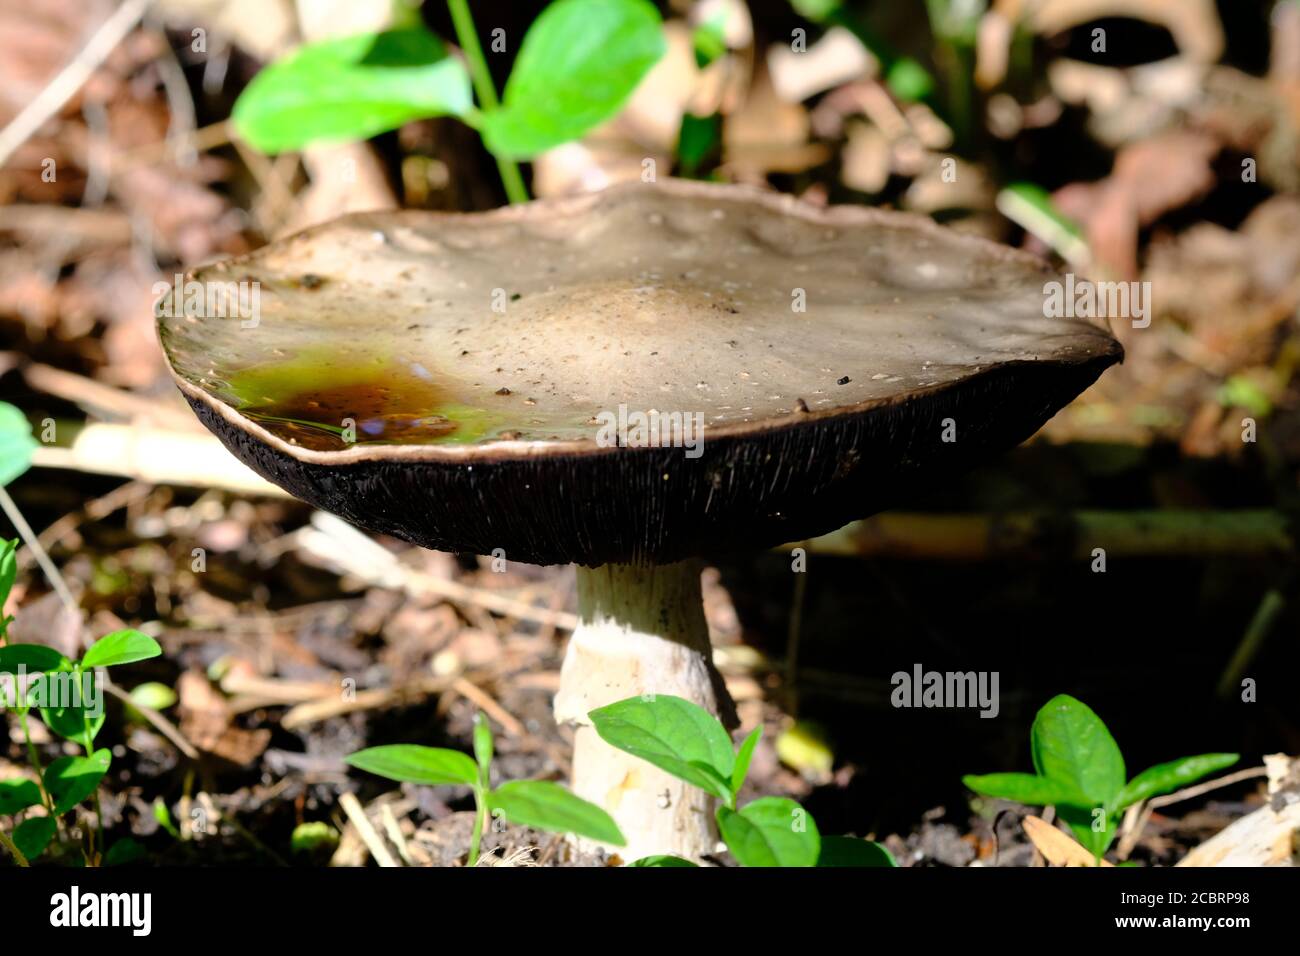 Mature agaricus (Agaricus bitorquis?) mushroom with dark, attached gills and tan/ brown cap. Ottawa, Ontario, Canada. Stock Photo